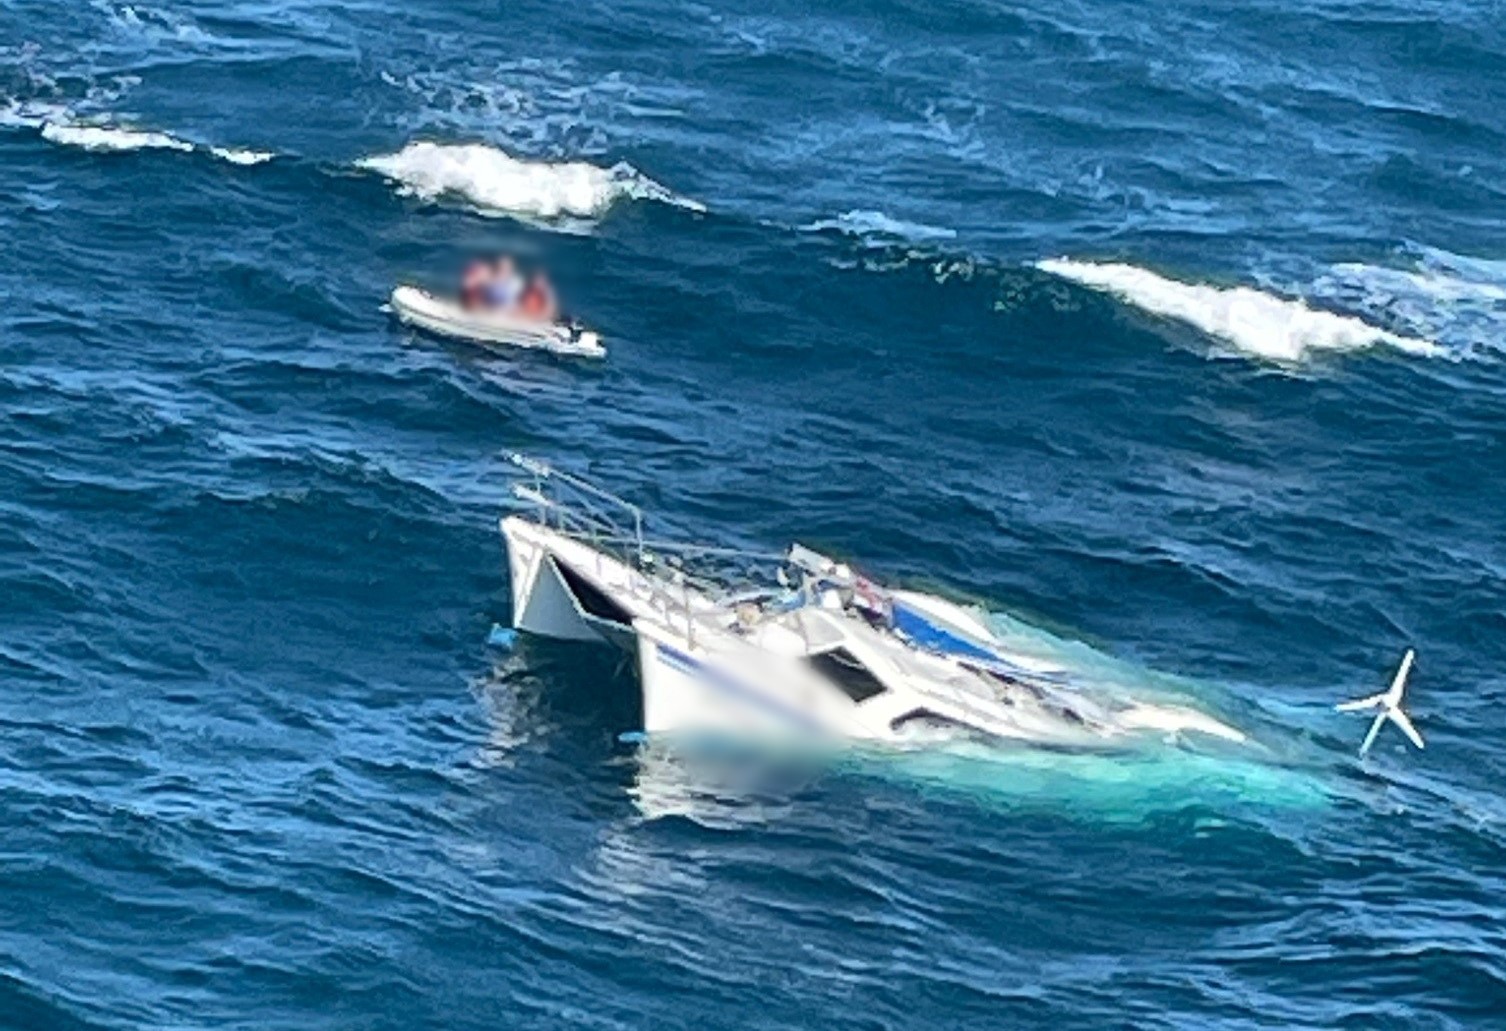 blue lagoon catamaran sinking